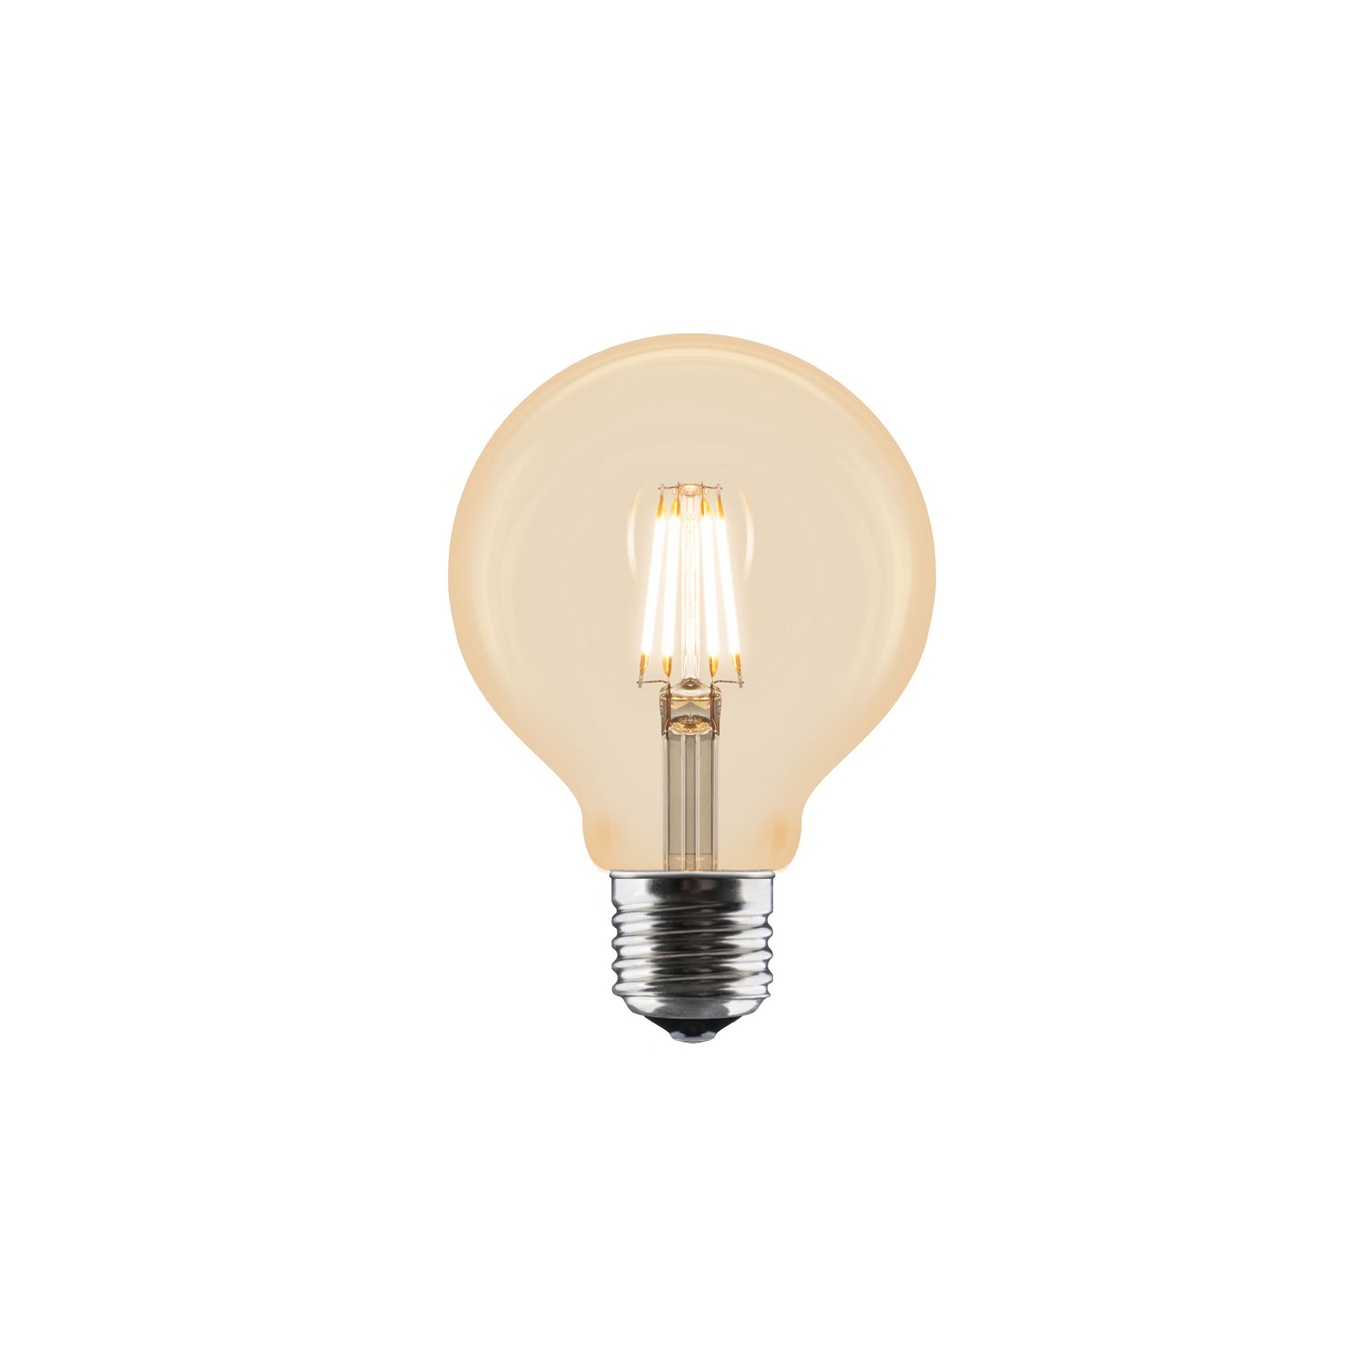 Idea Glühbirne E27 LED 2W, 80 mm